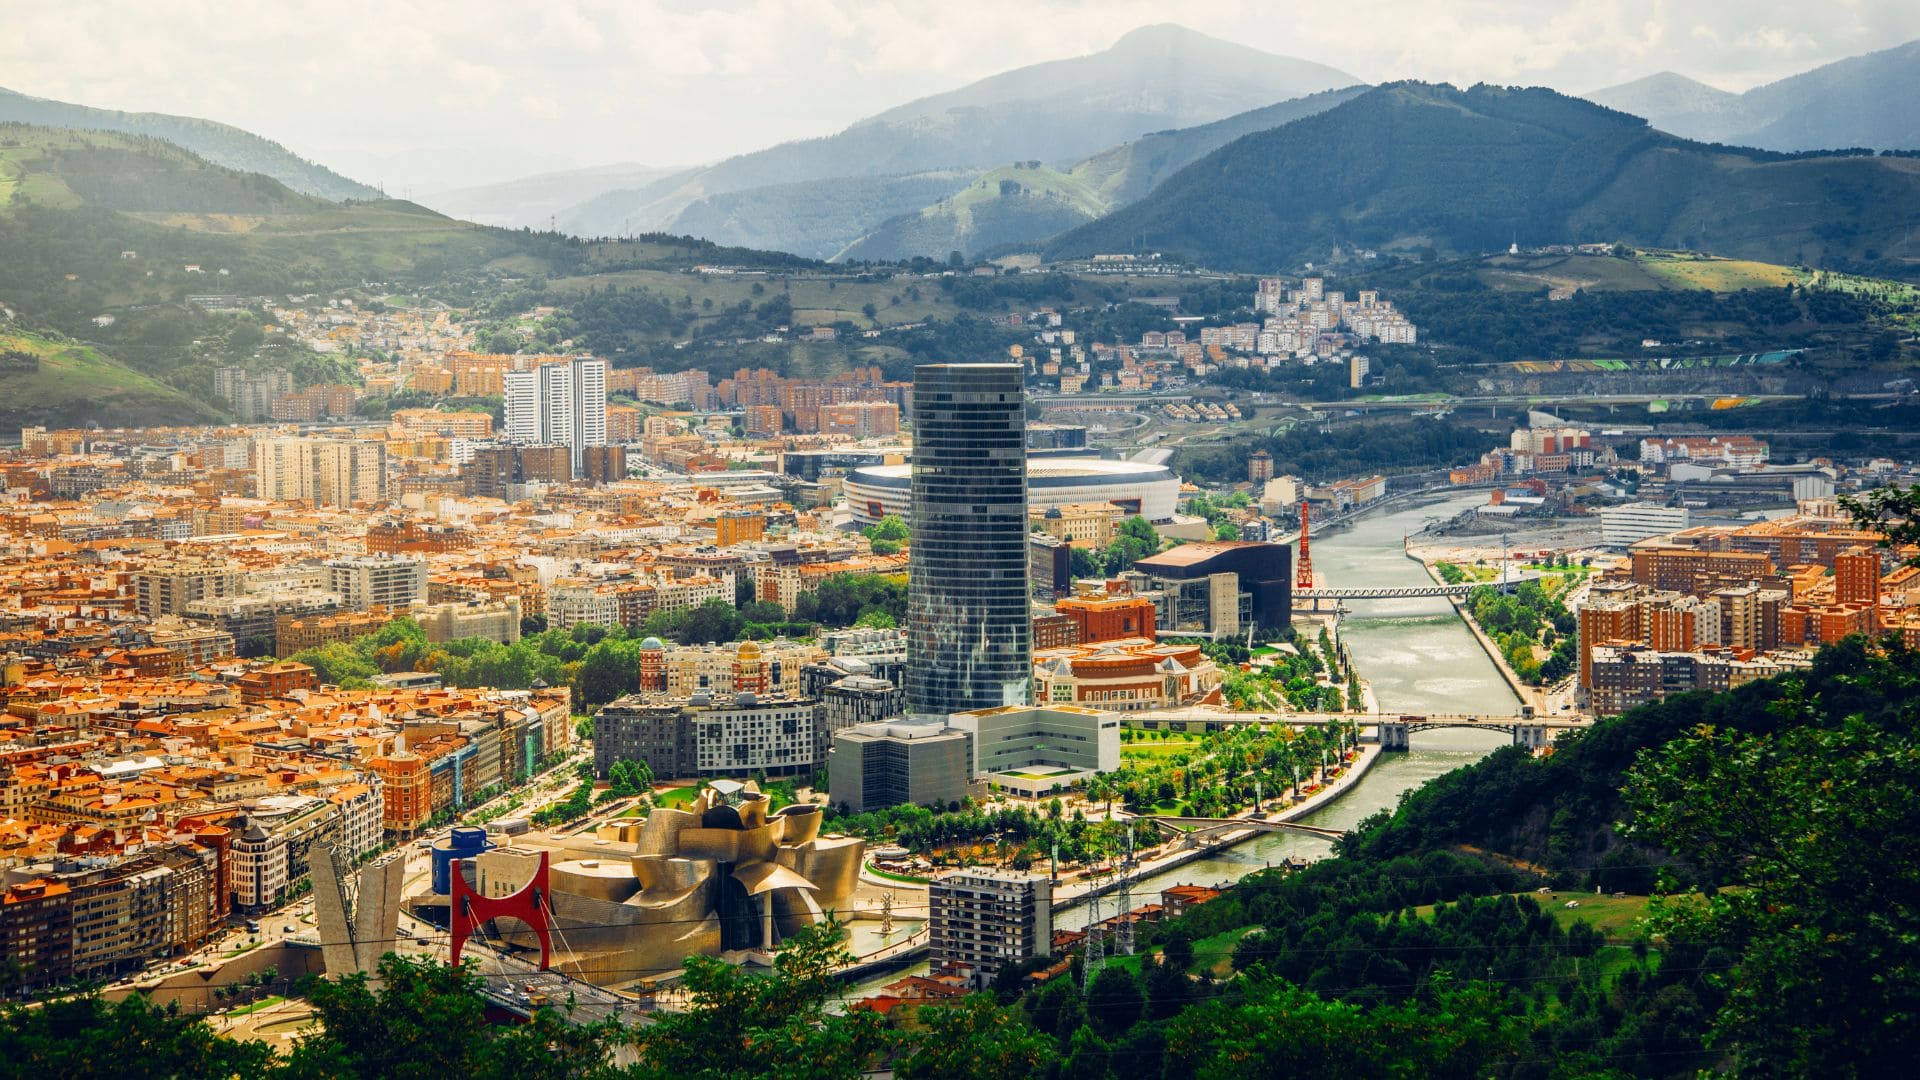 El IMSERSO te invita a conocer Bilbao por tan solo 125 euros